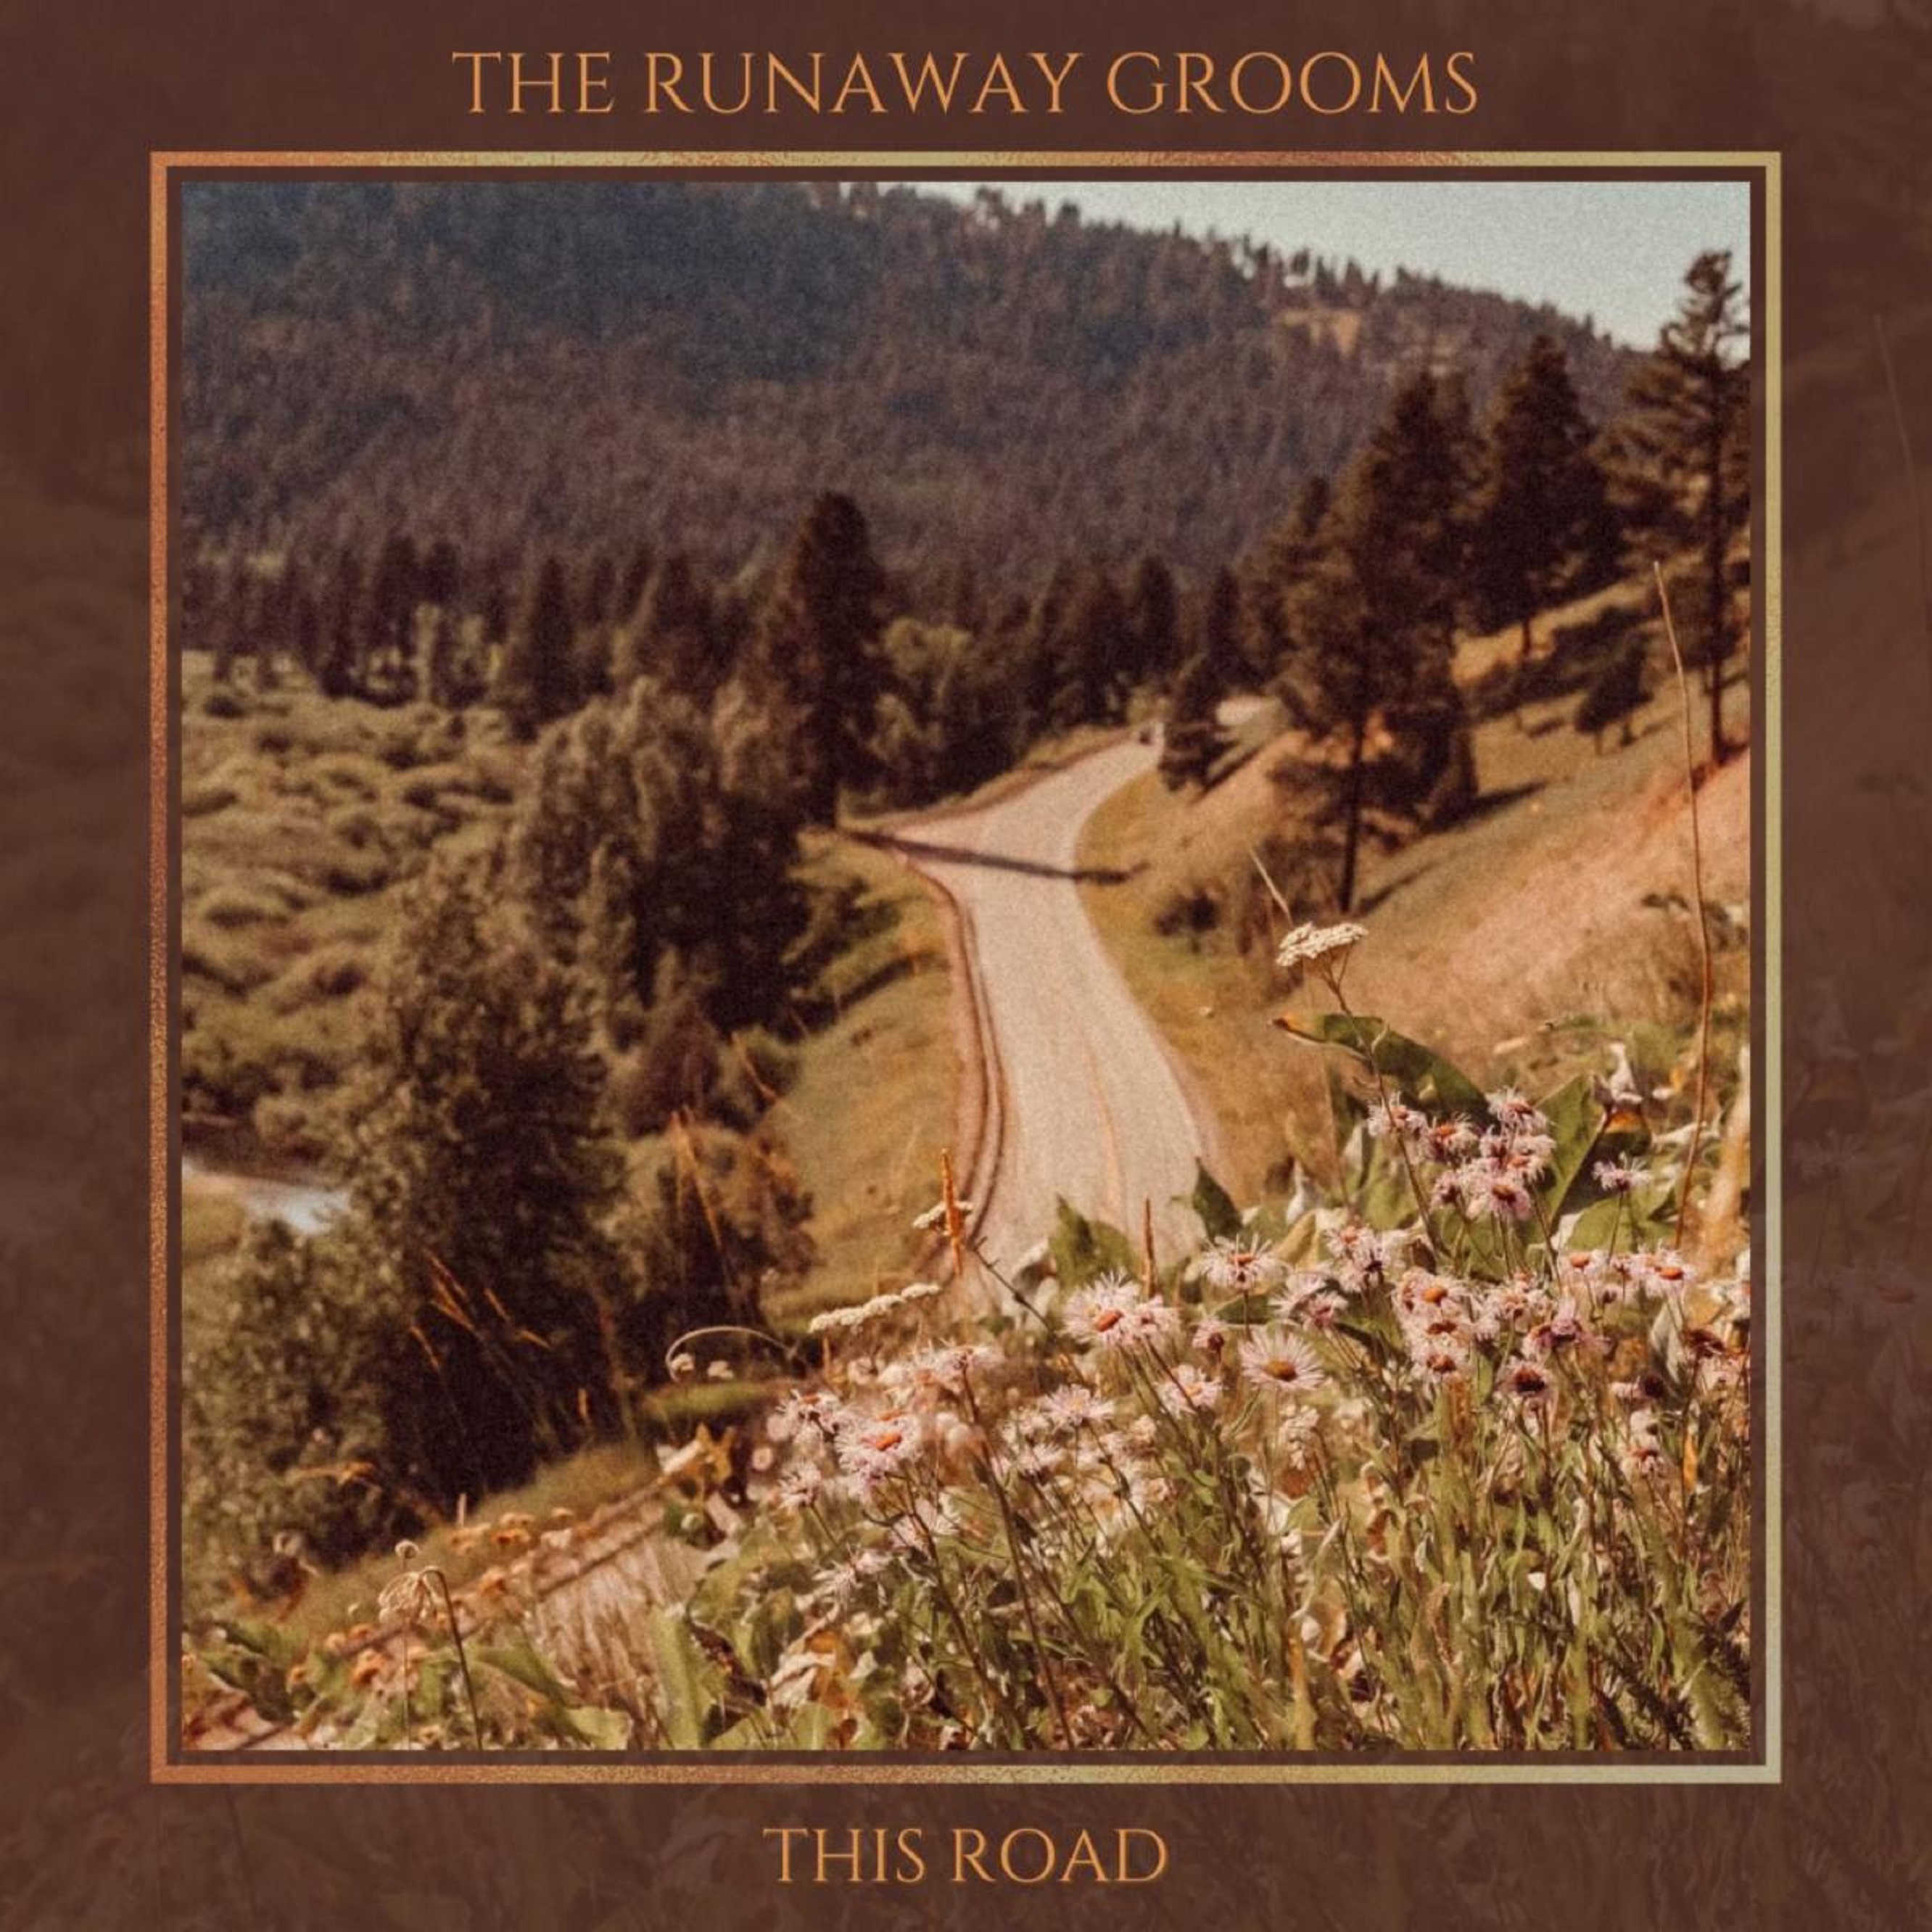 The Runaway Grooms Release Genre-Blending Roots Rock LP "This Road"